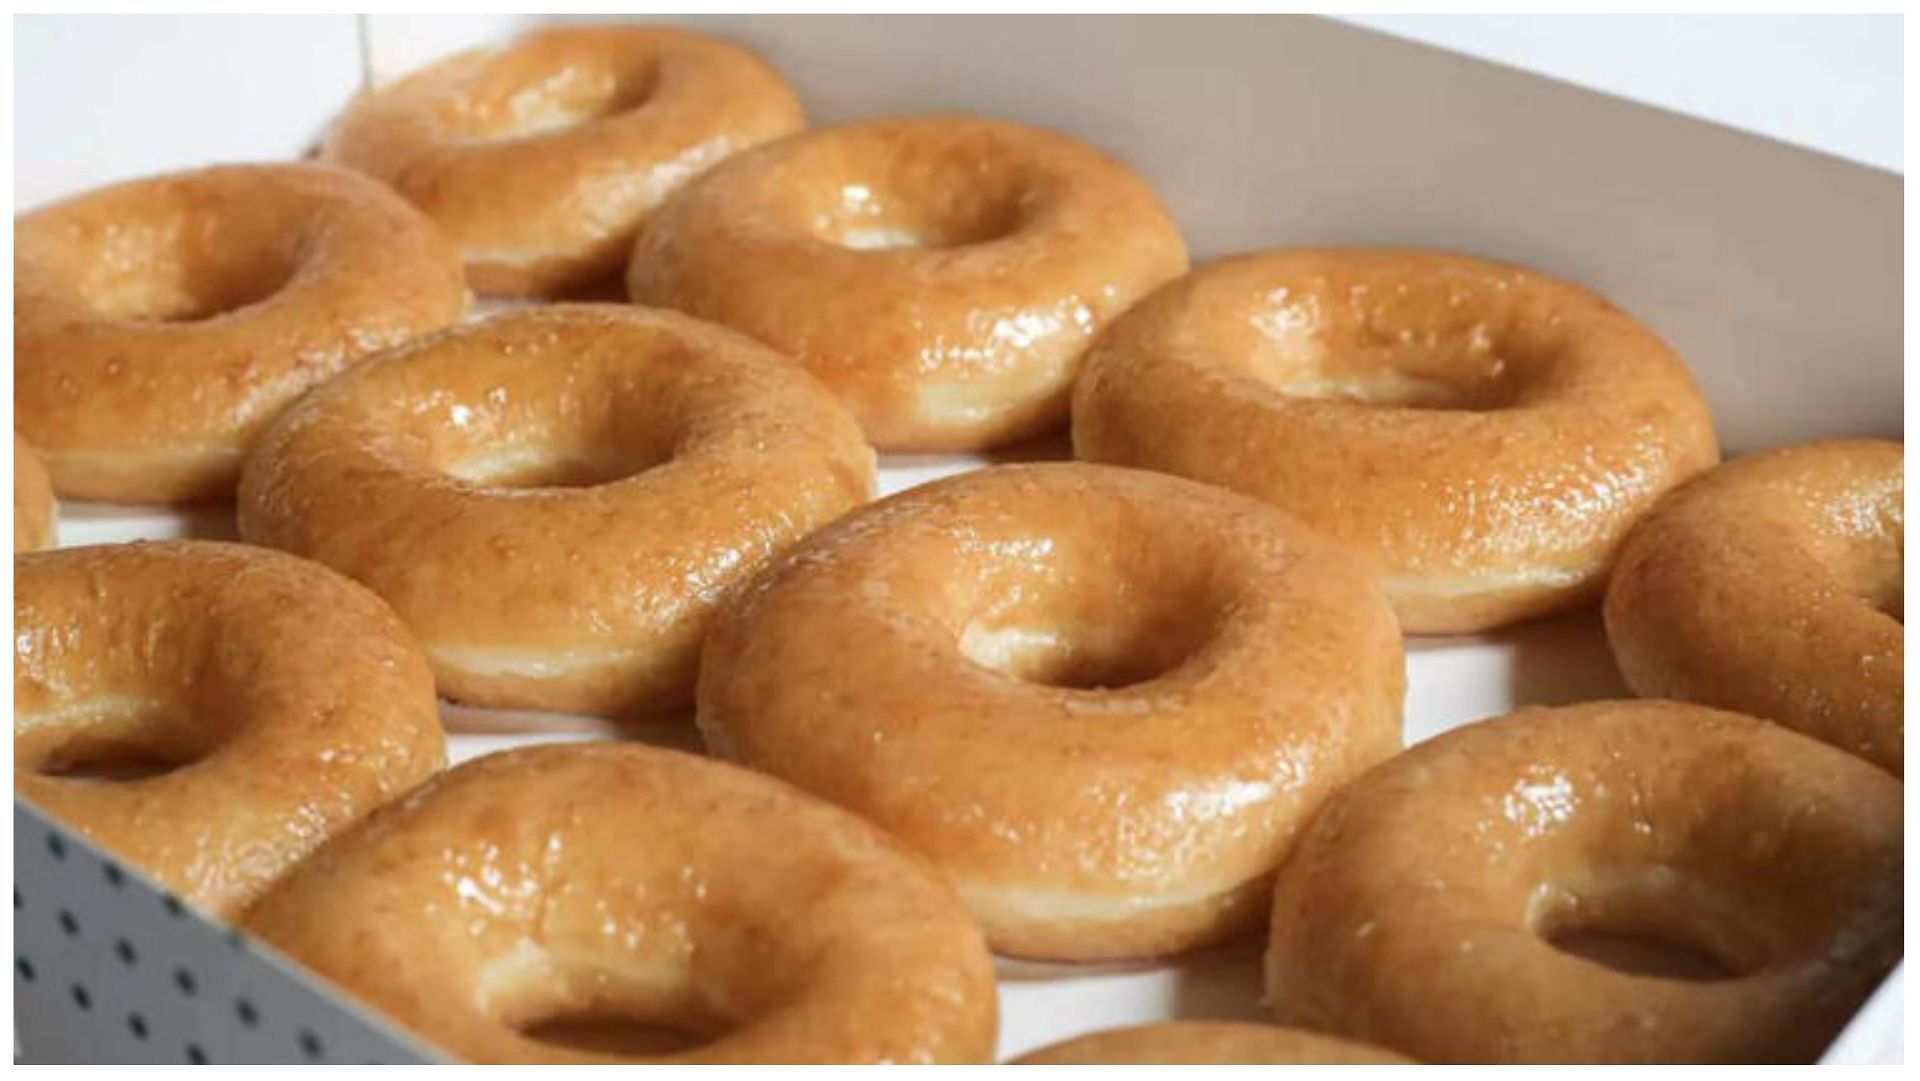 Krispy Kreme Offers a Dozen Donuts for $2 on Cyber Monday (Image via Krispy Kreme)